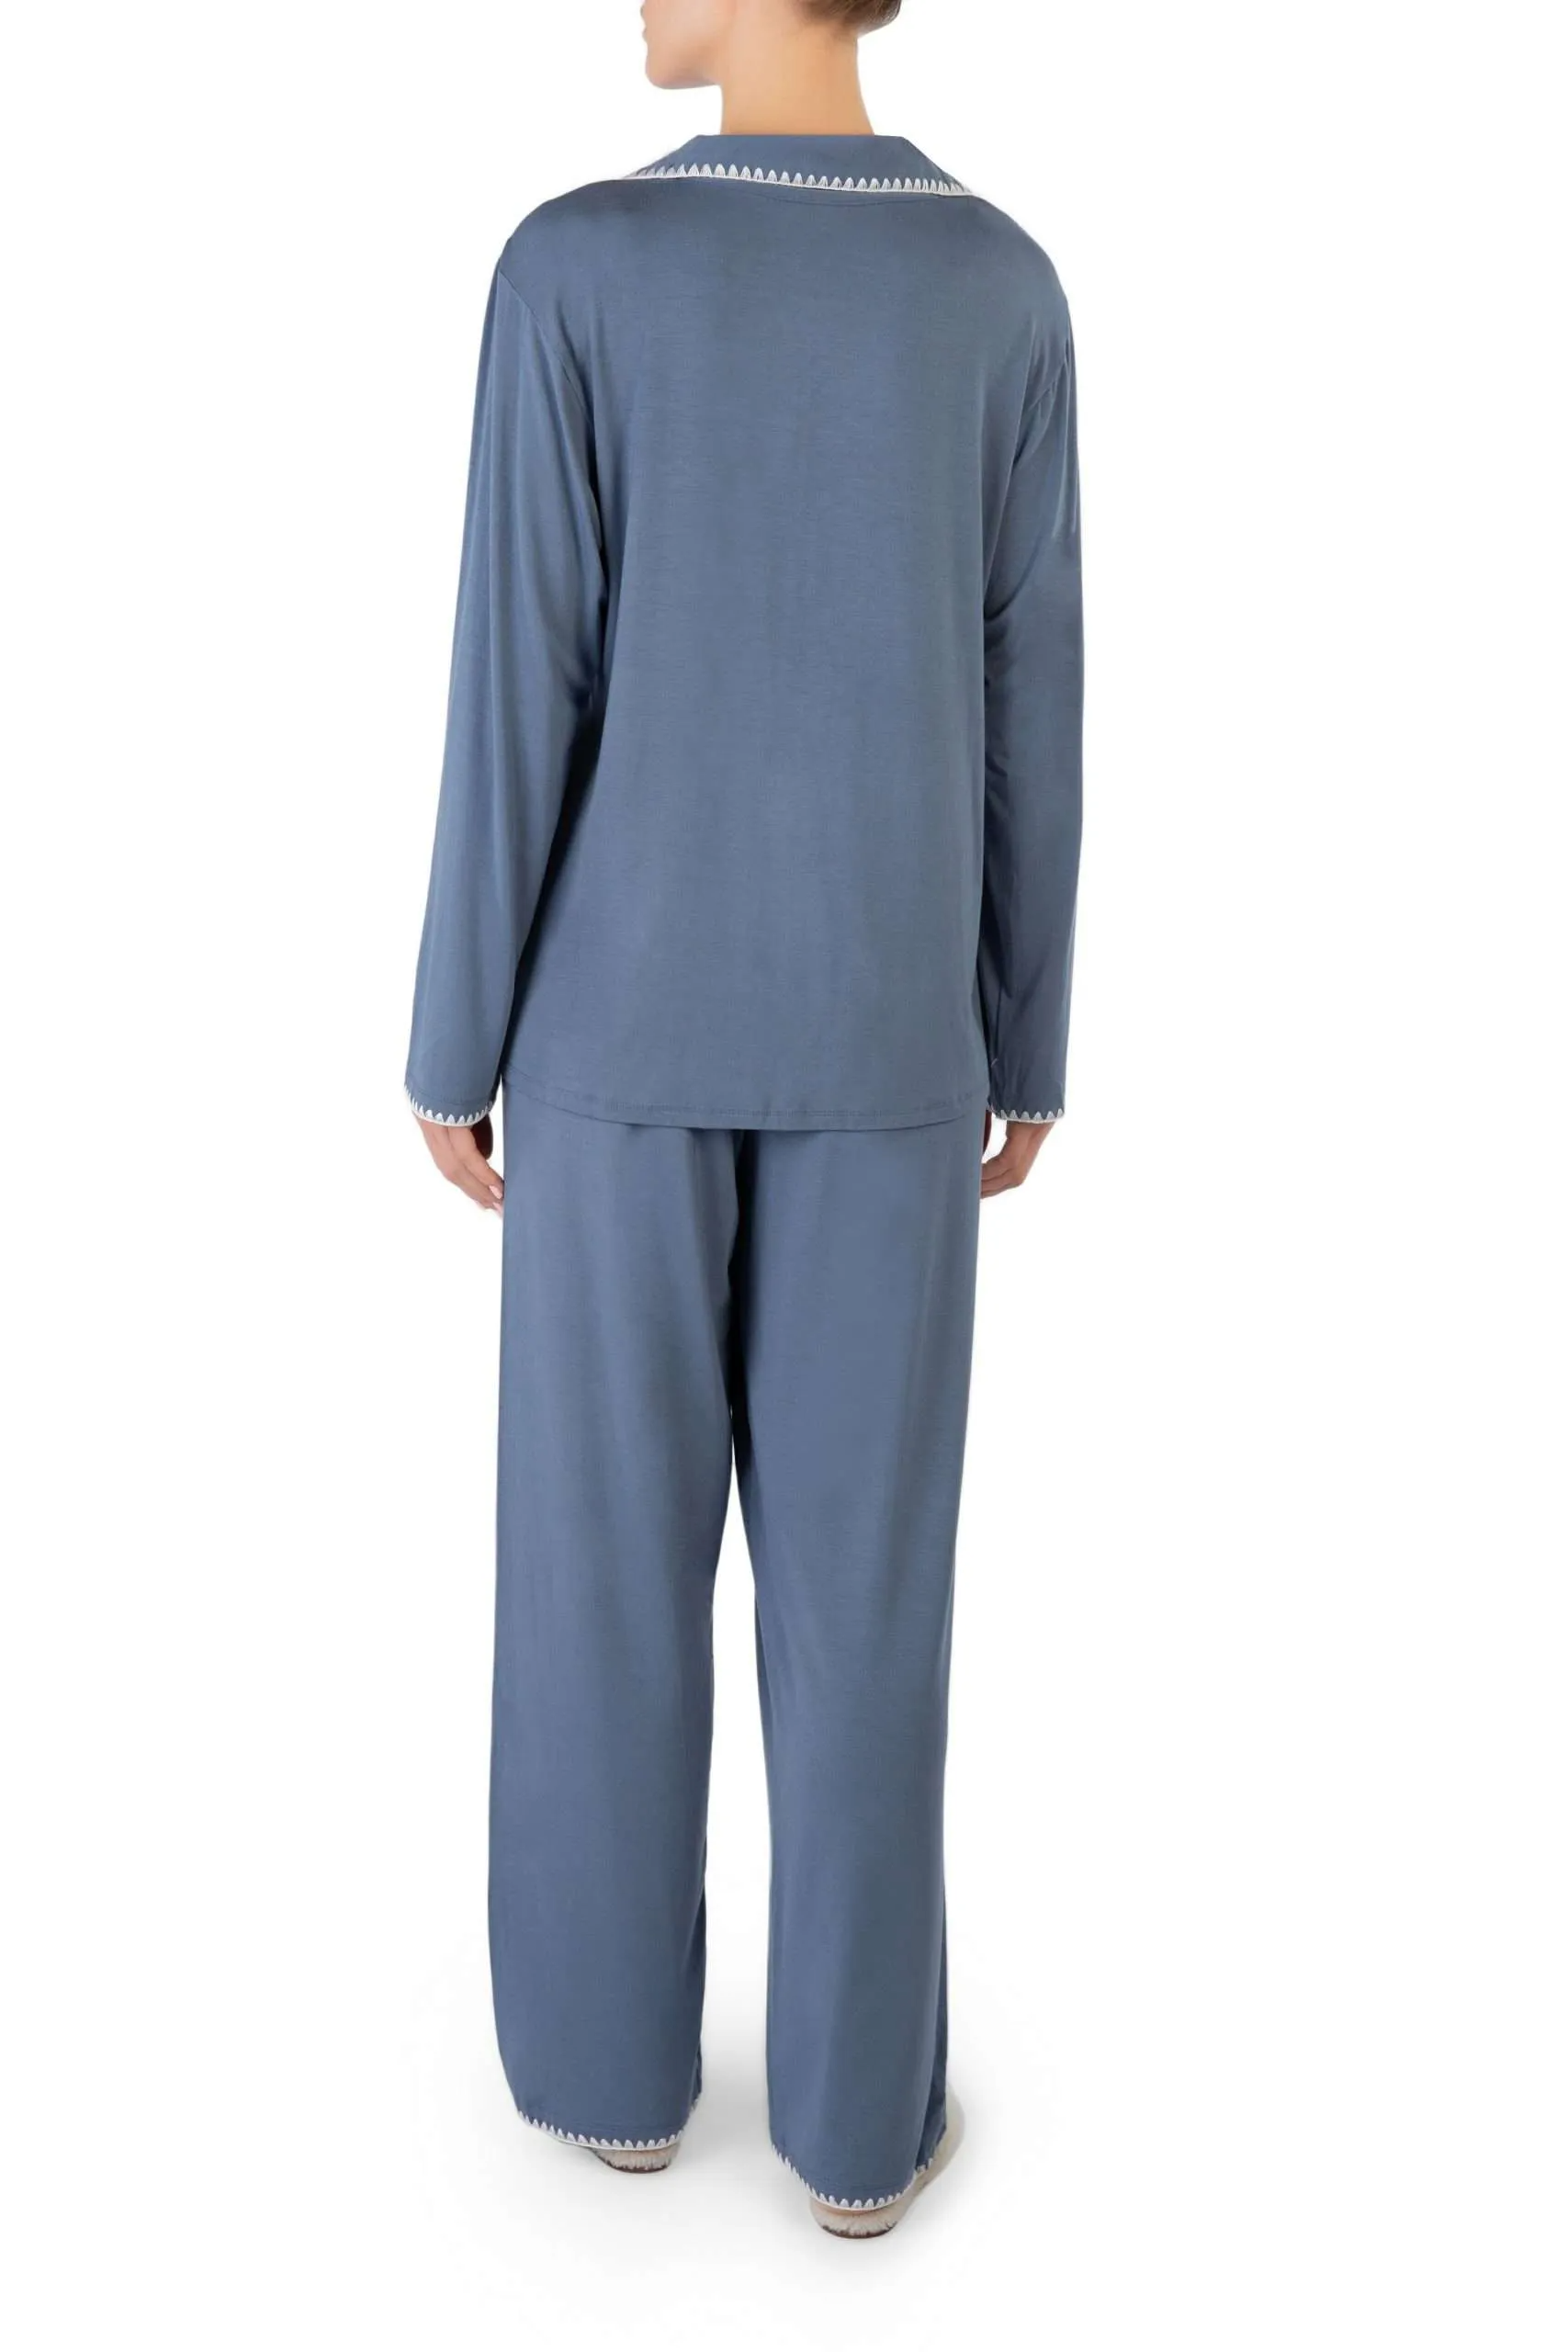 Eberjey Frida PJ Set - Coastal Blue/Ivory Sleepwear - Pajamas by Eberjey | Grace the Boutique